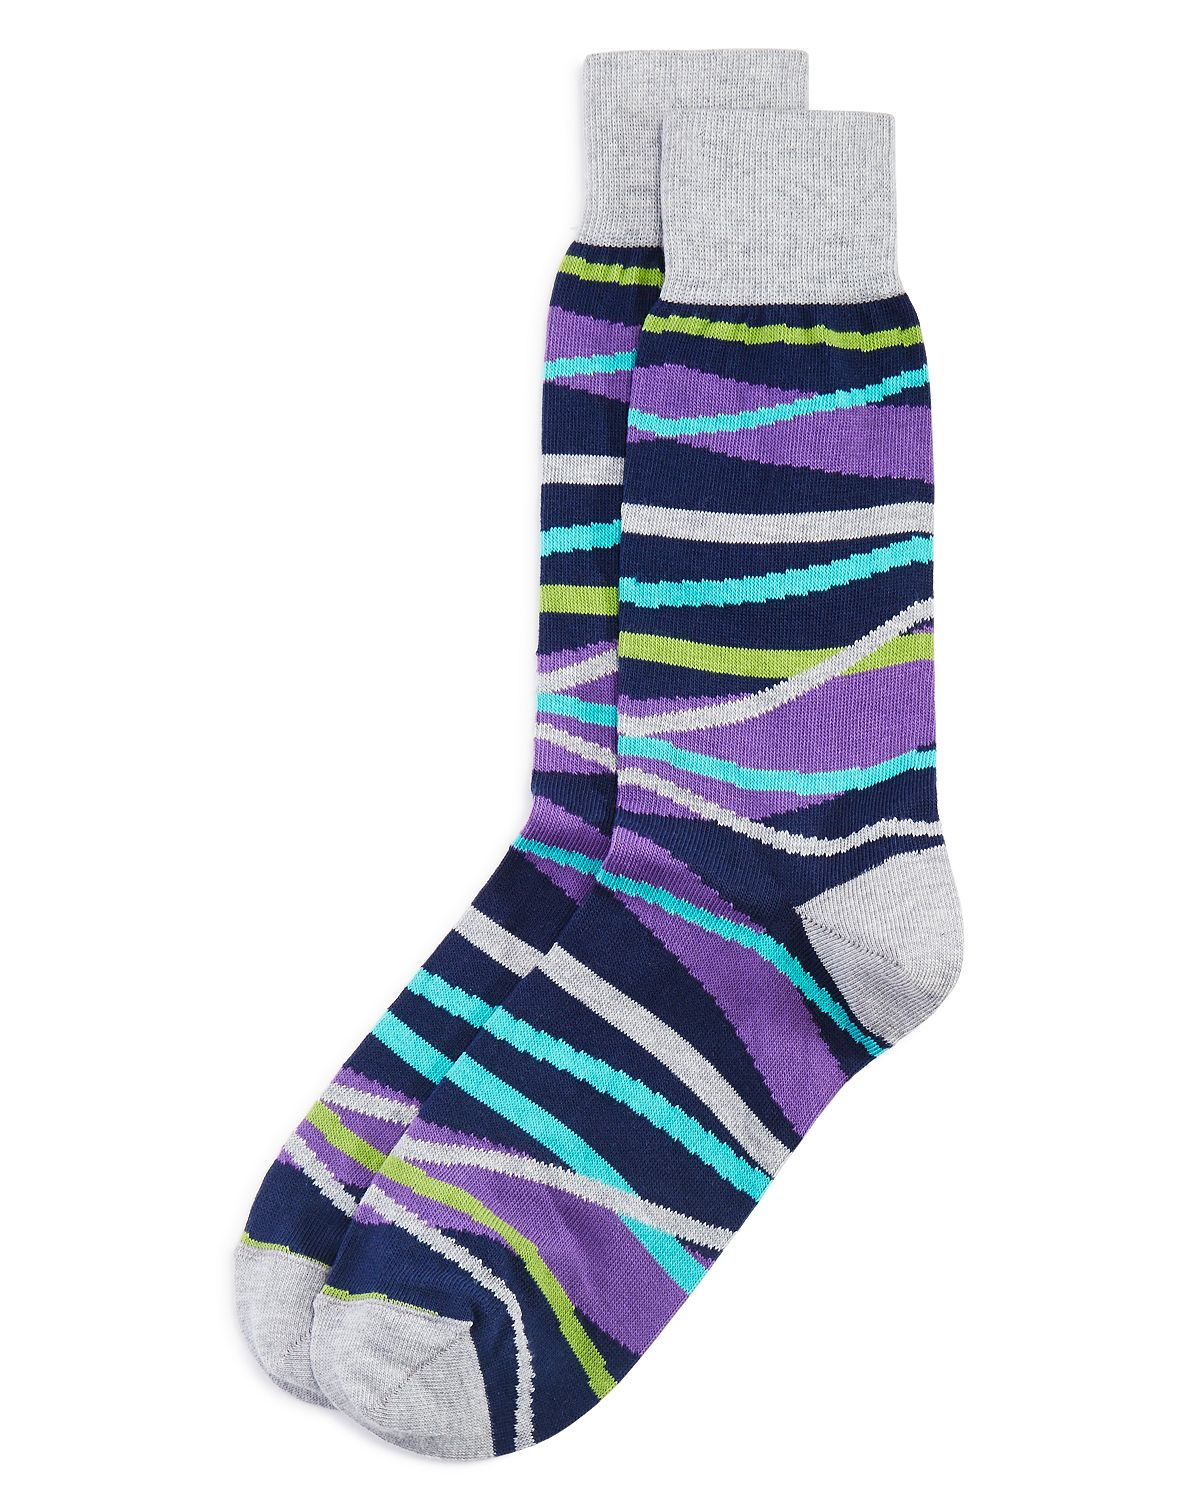 The Men's Store Modern Striped Socks Gray/blue/purple